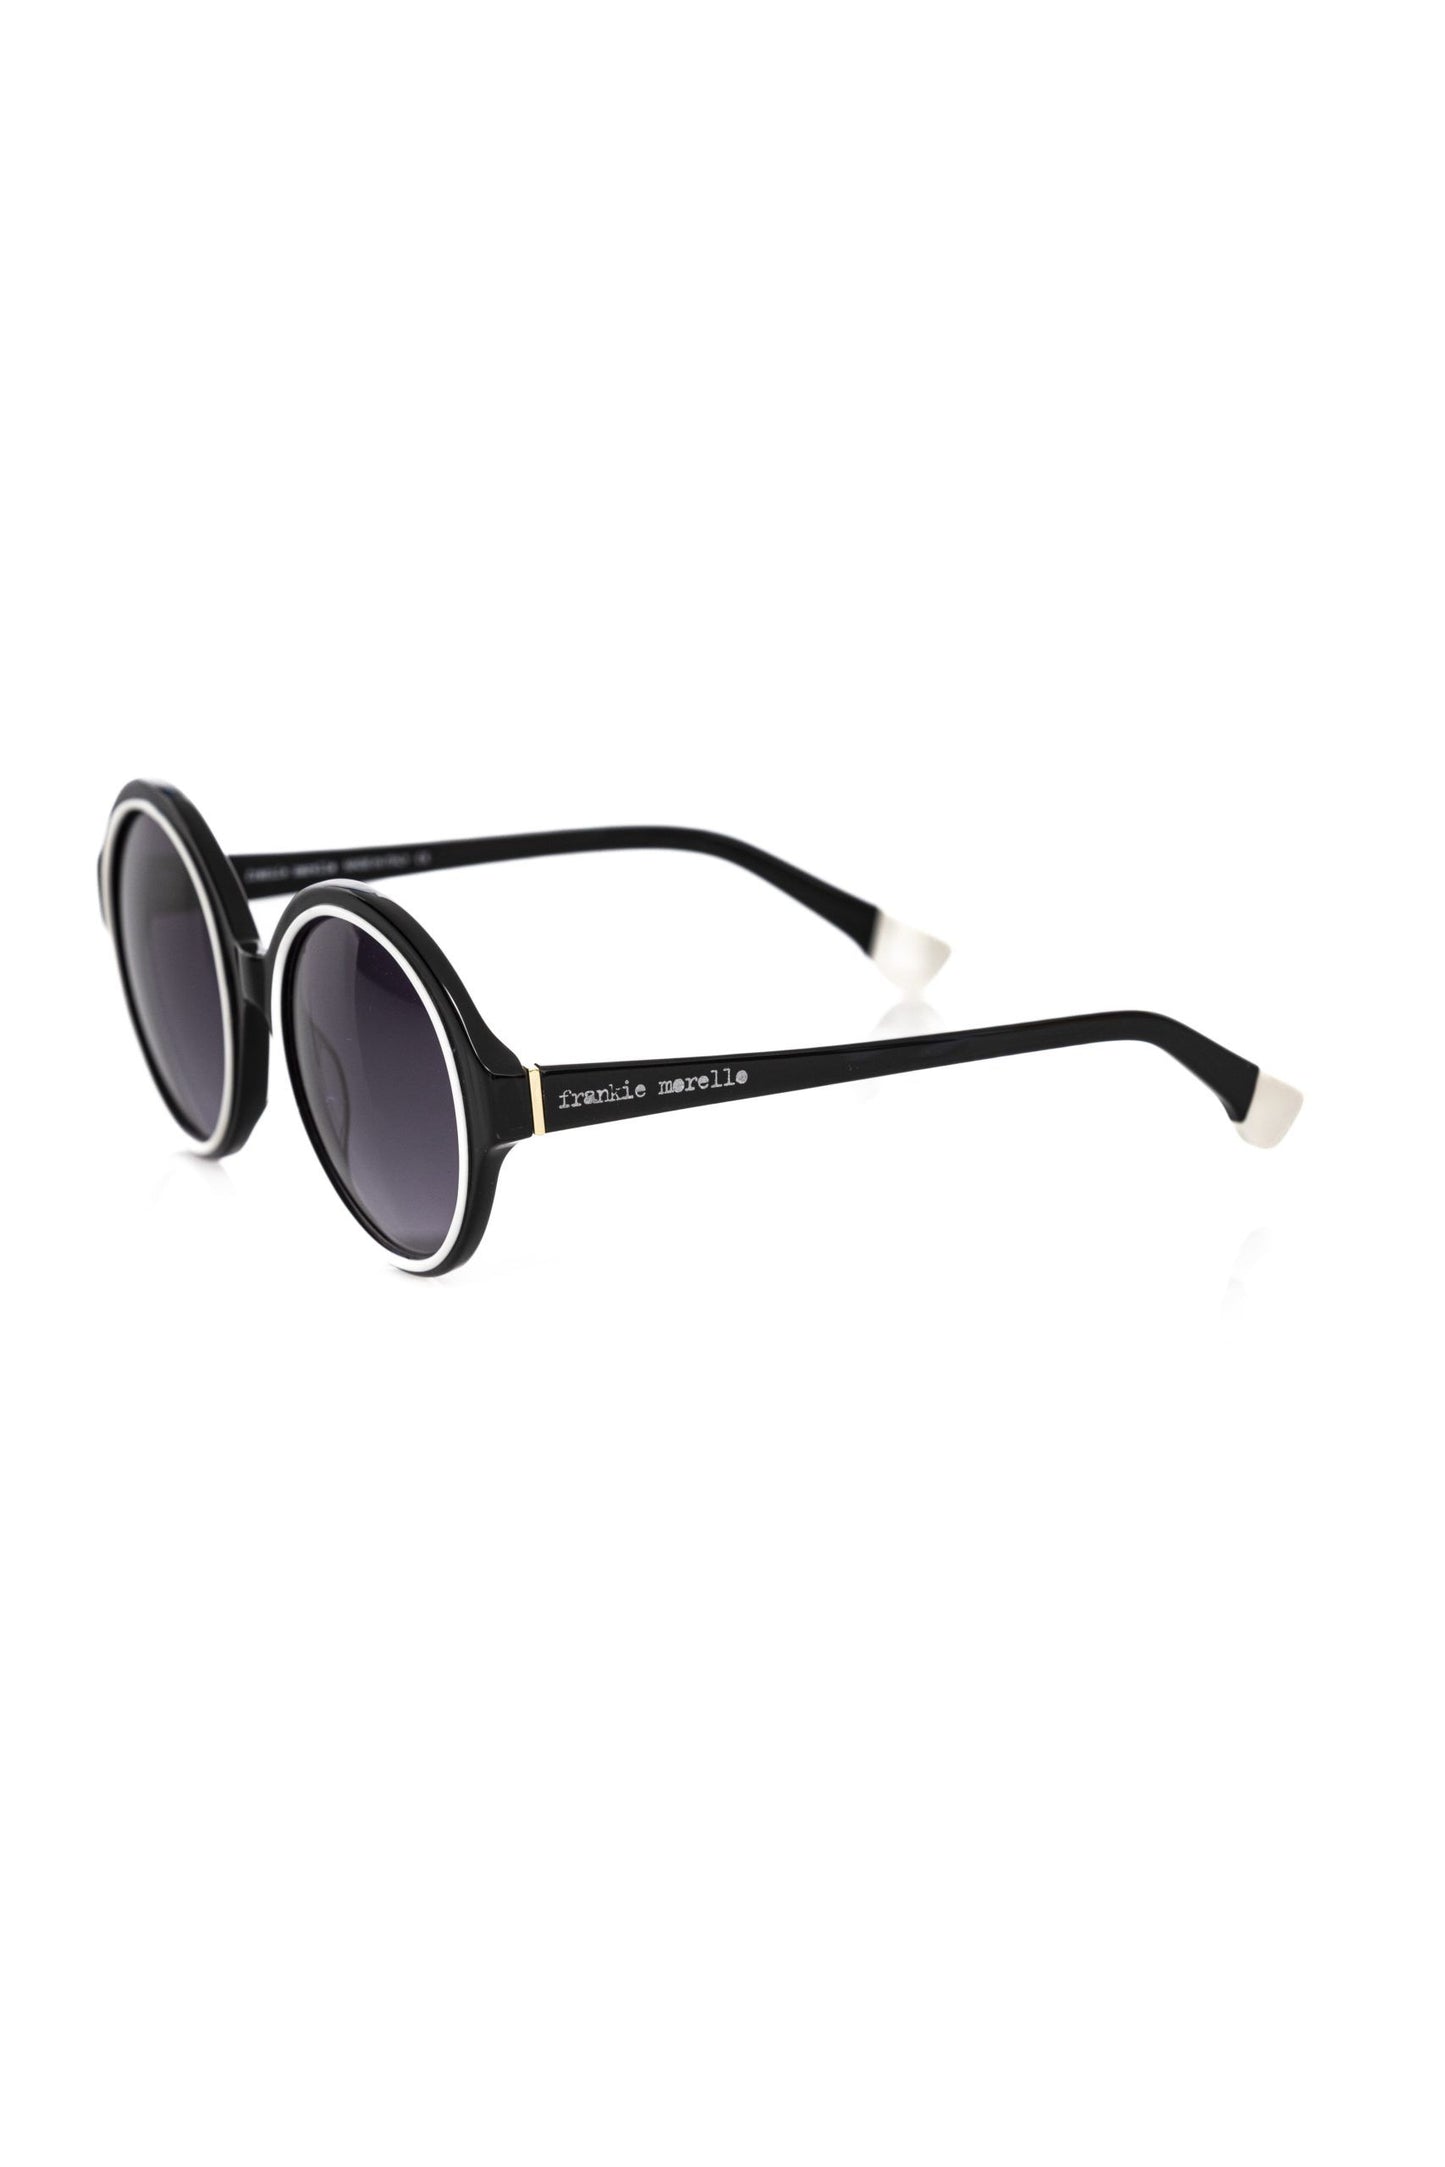 Frankie Morello FRMO-22073 Black Acetate Sunglasses